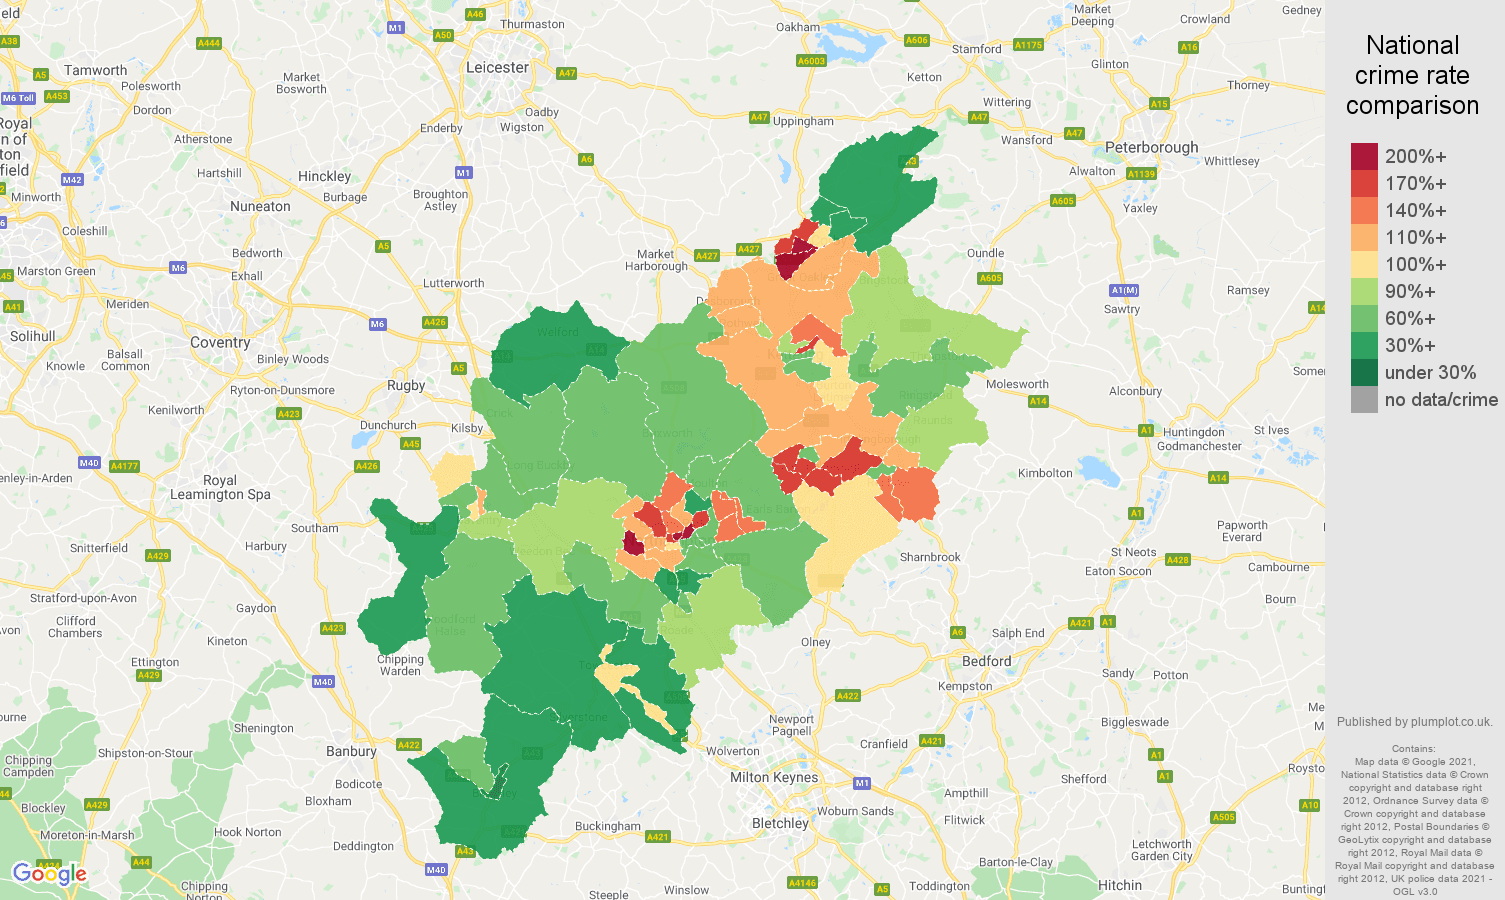 Northampton criminal damage and arson crime rate comparison map